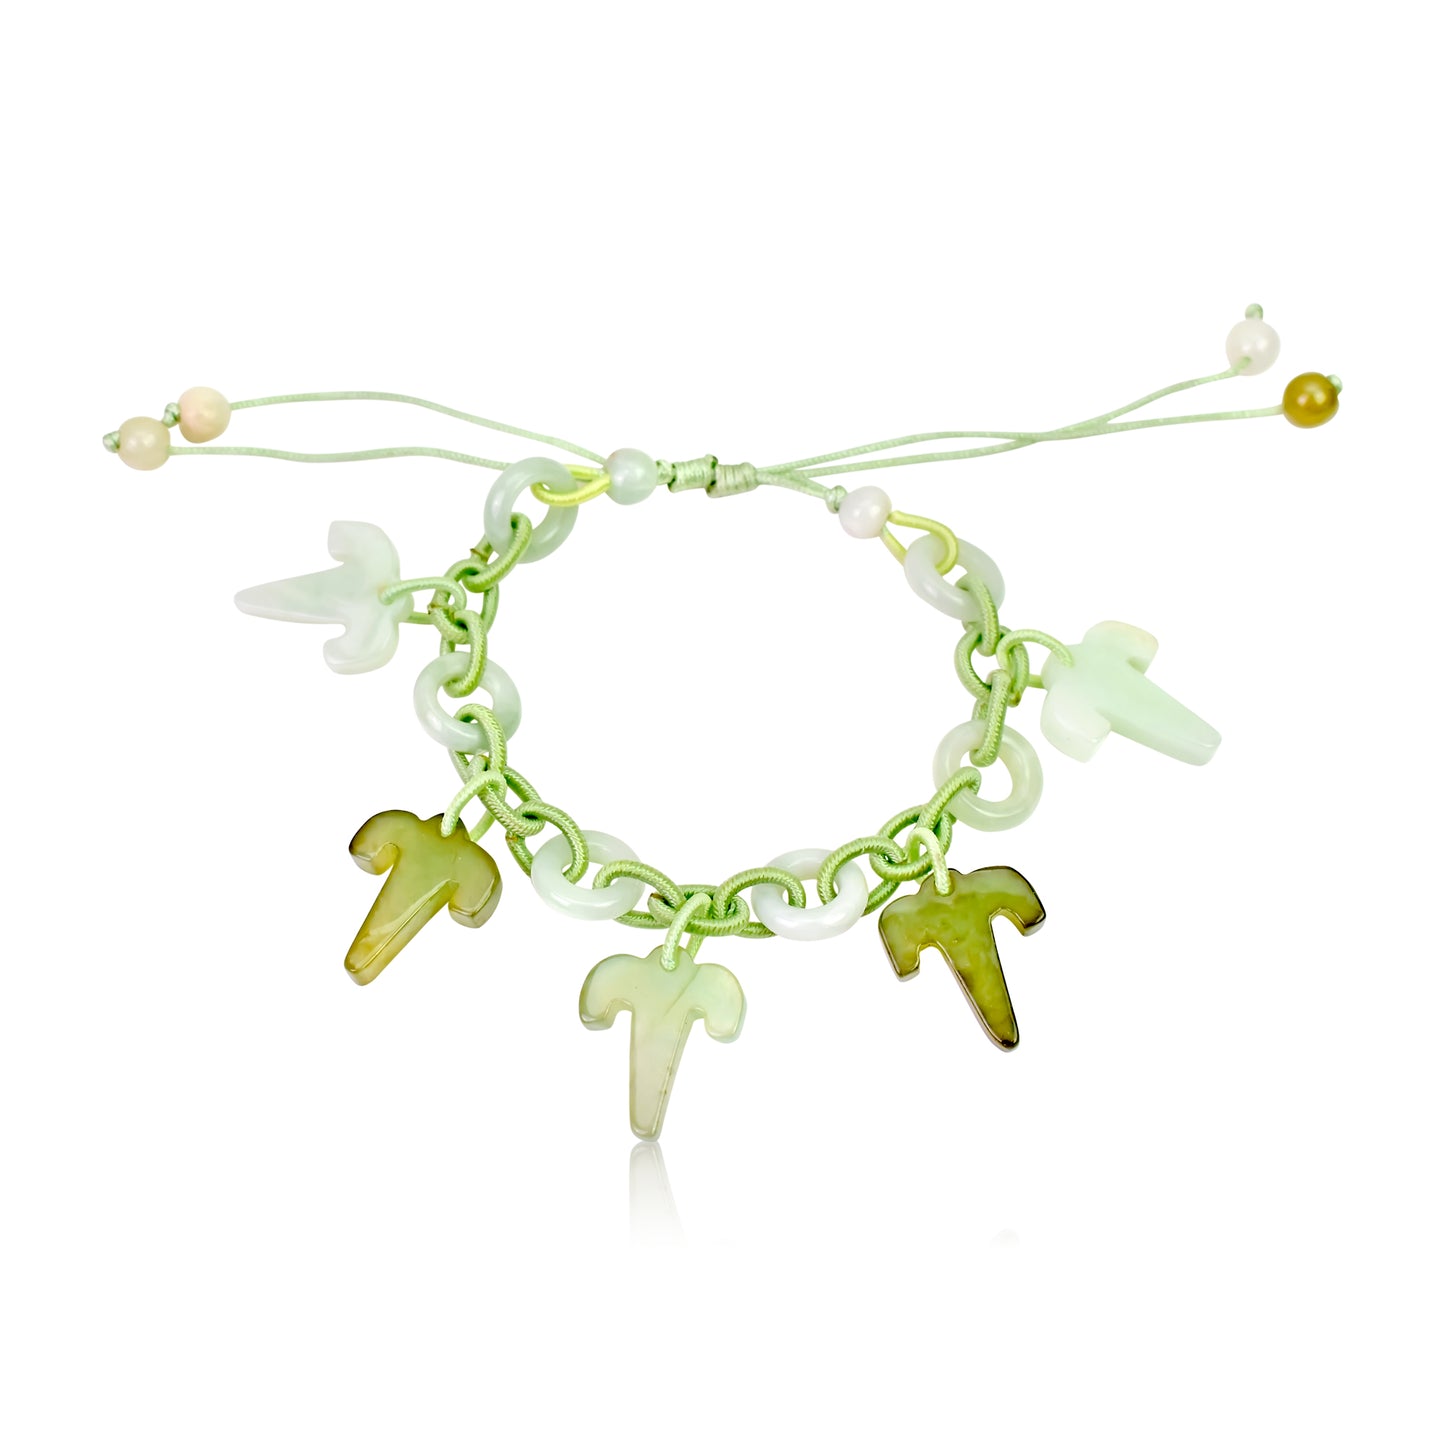 Aries Astrology Handmade Jade Bracelet with Sea Green Cord